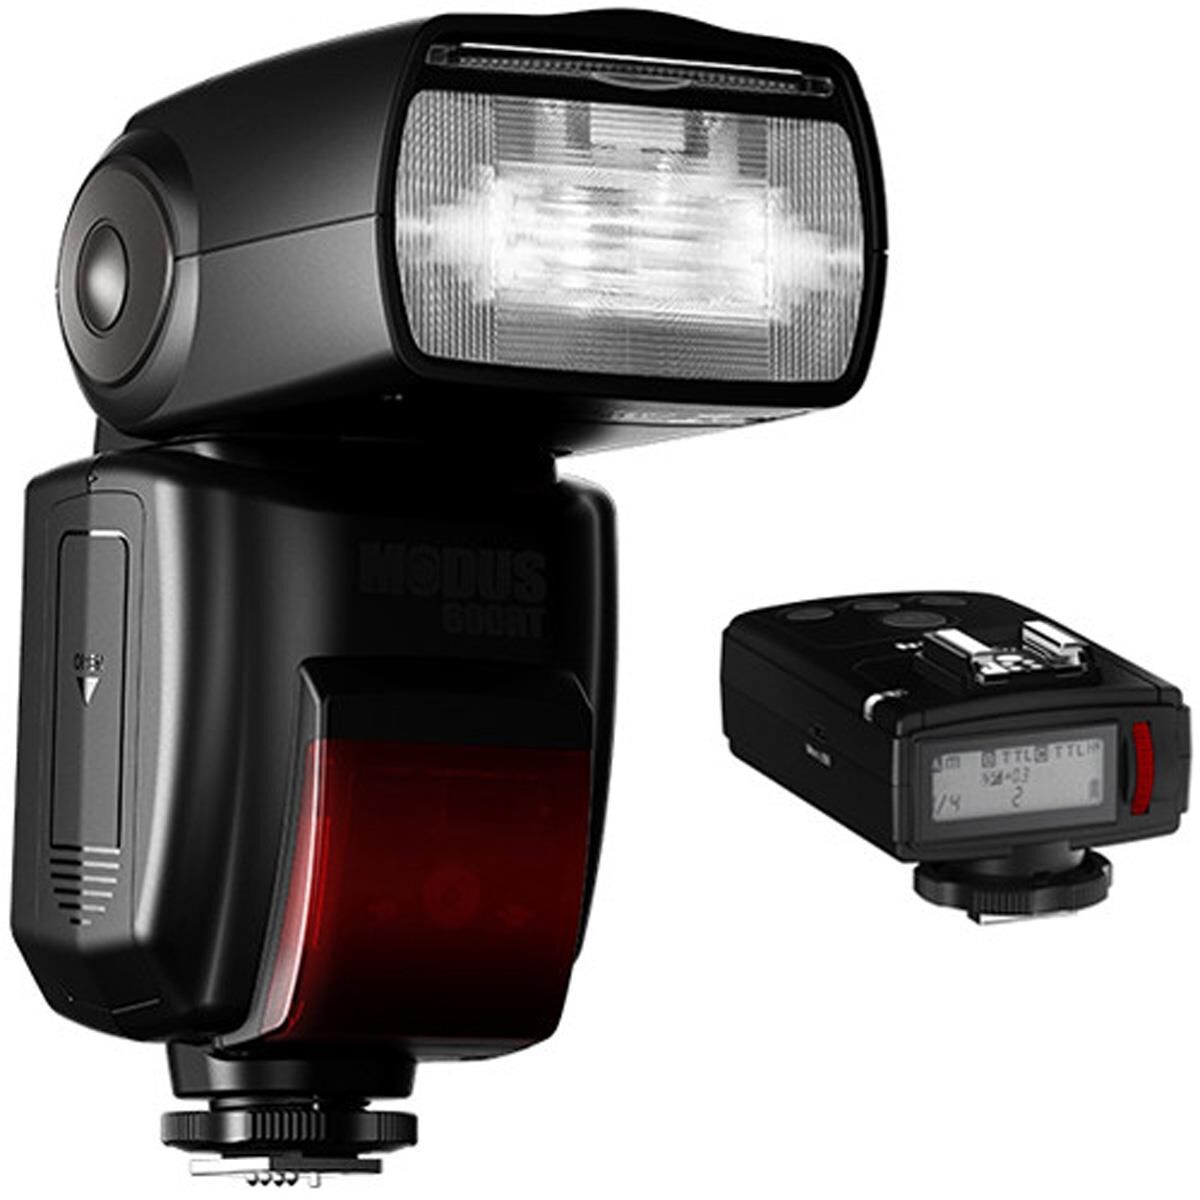 Hahnel Modus 600RT Wireless Flash Speedlight Kit for Sony Cameras